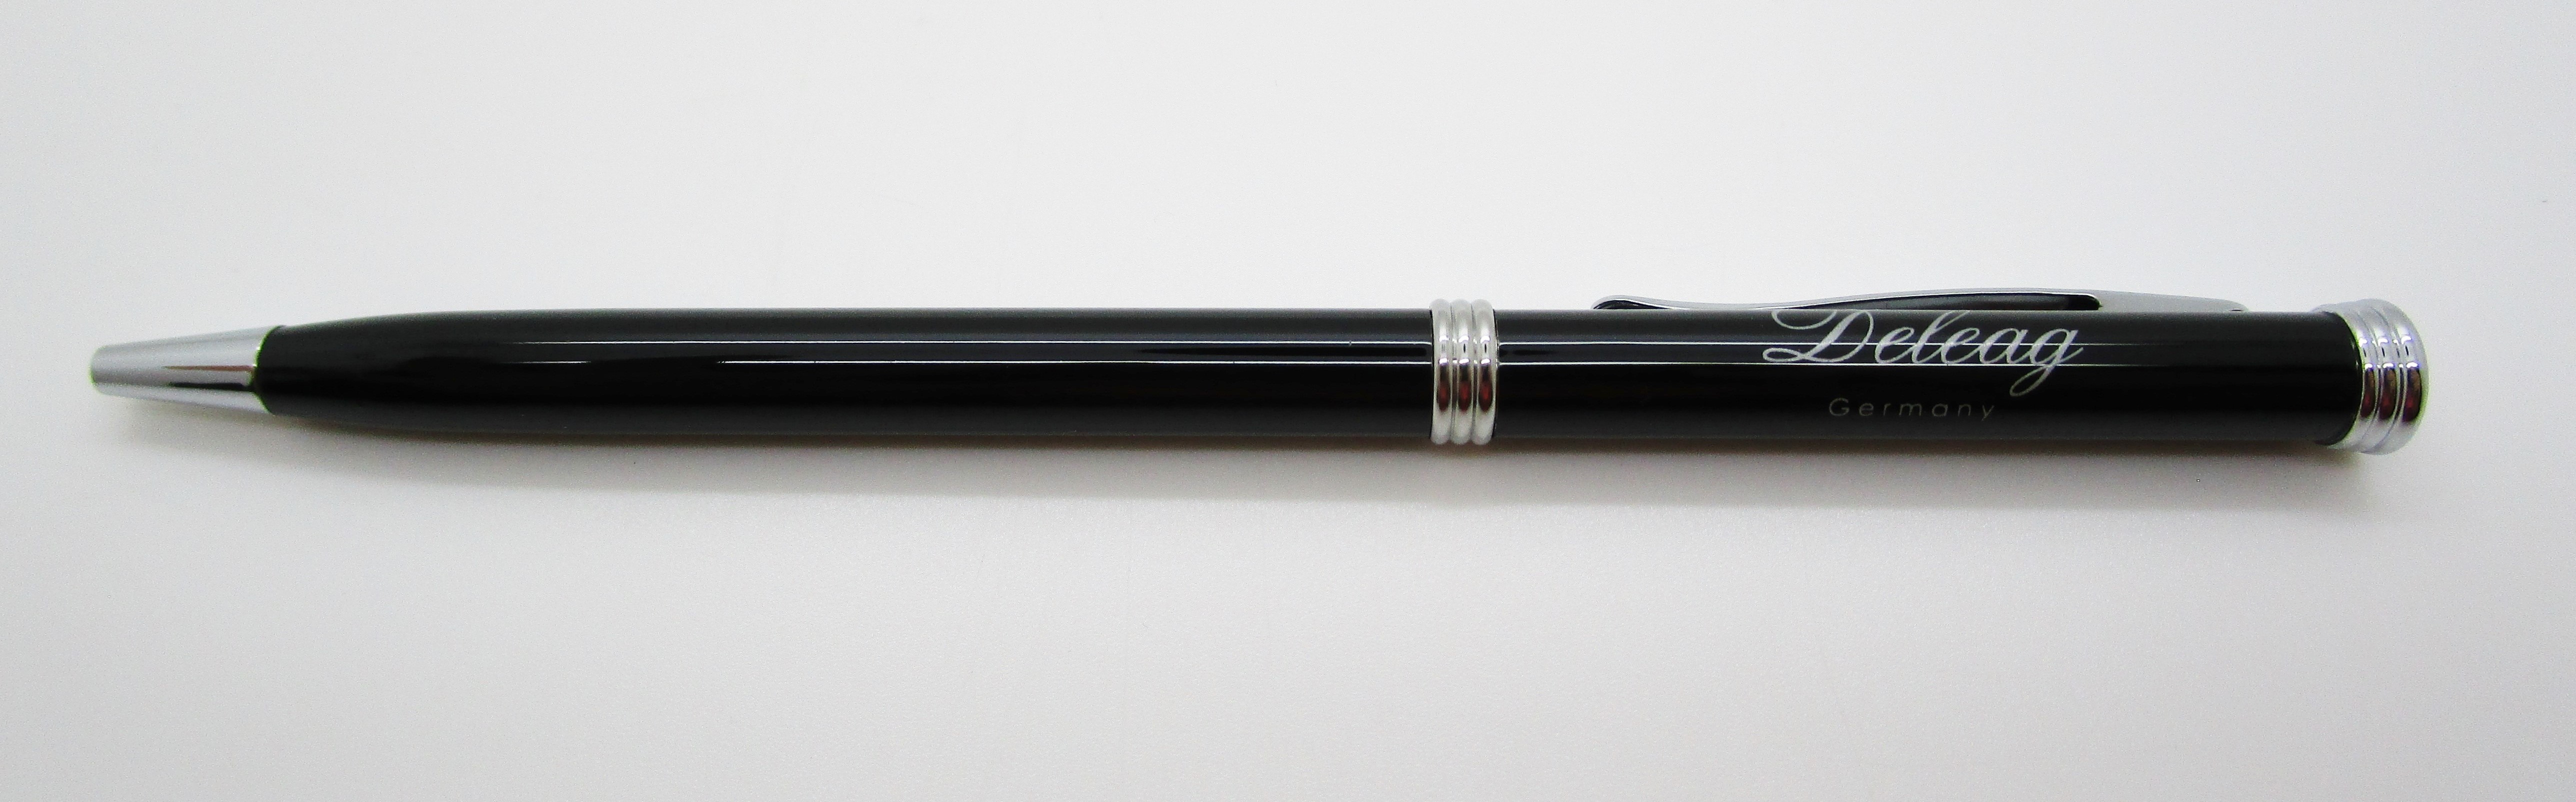 Metallkugelschreiber schwarz silber